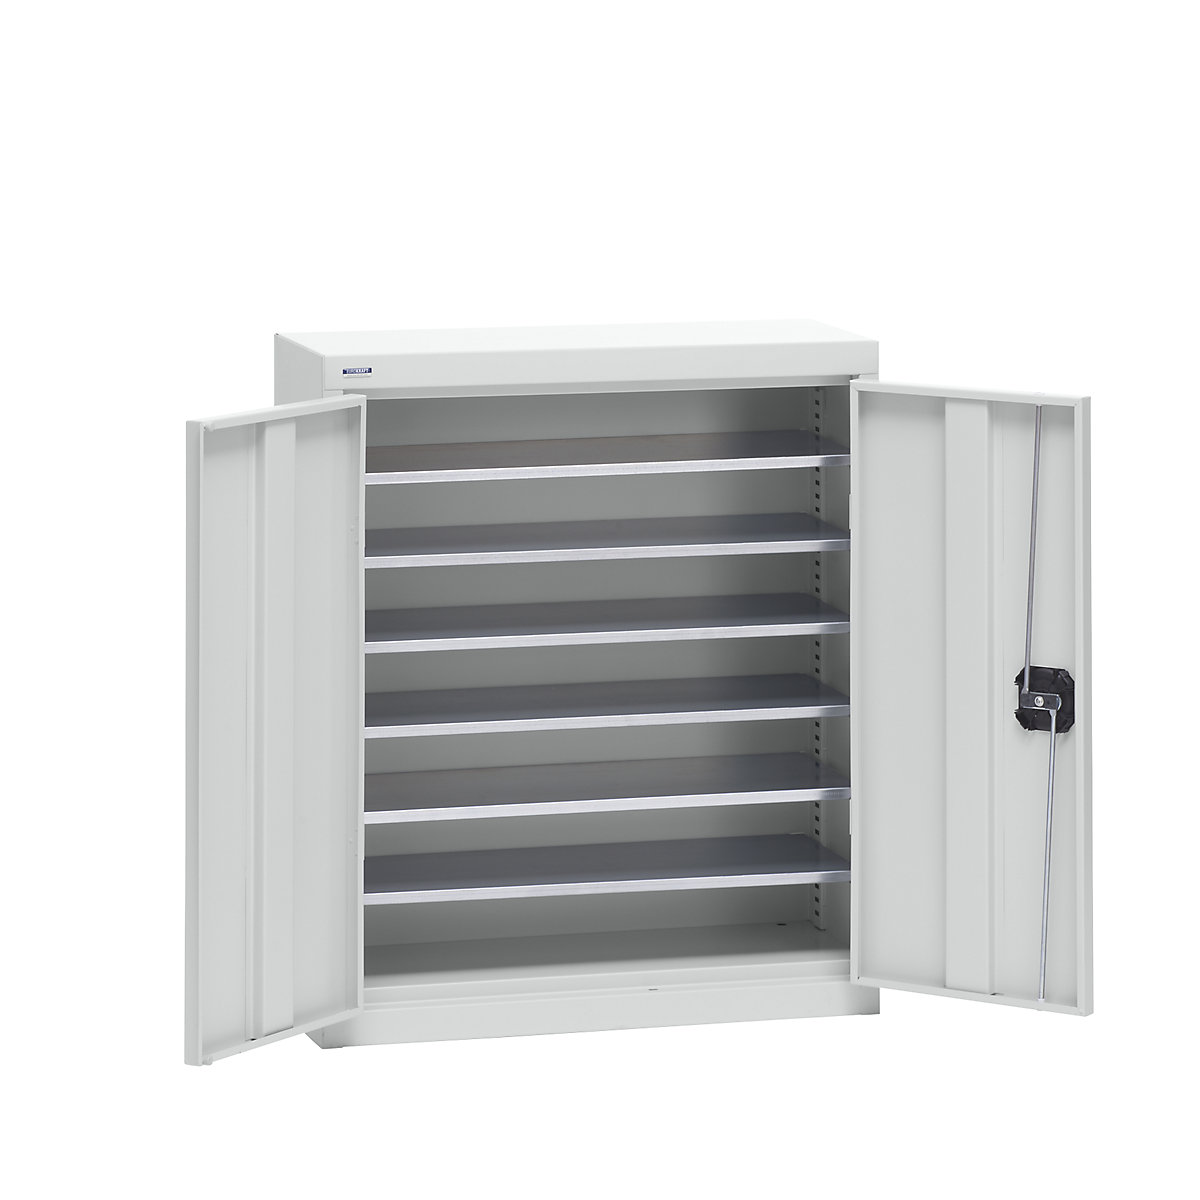 Storage cupboard made of sheet steel – eurokraft pro, height 780 mm, light grey RAL 7035, 6 shelves-7